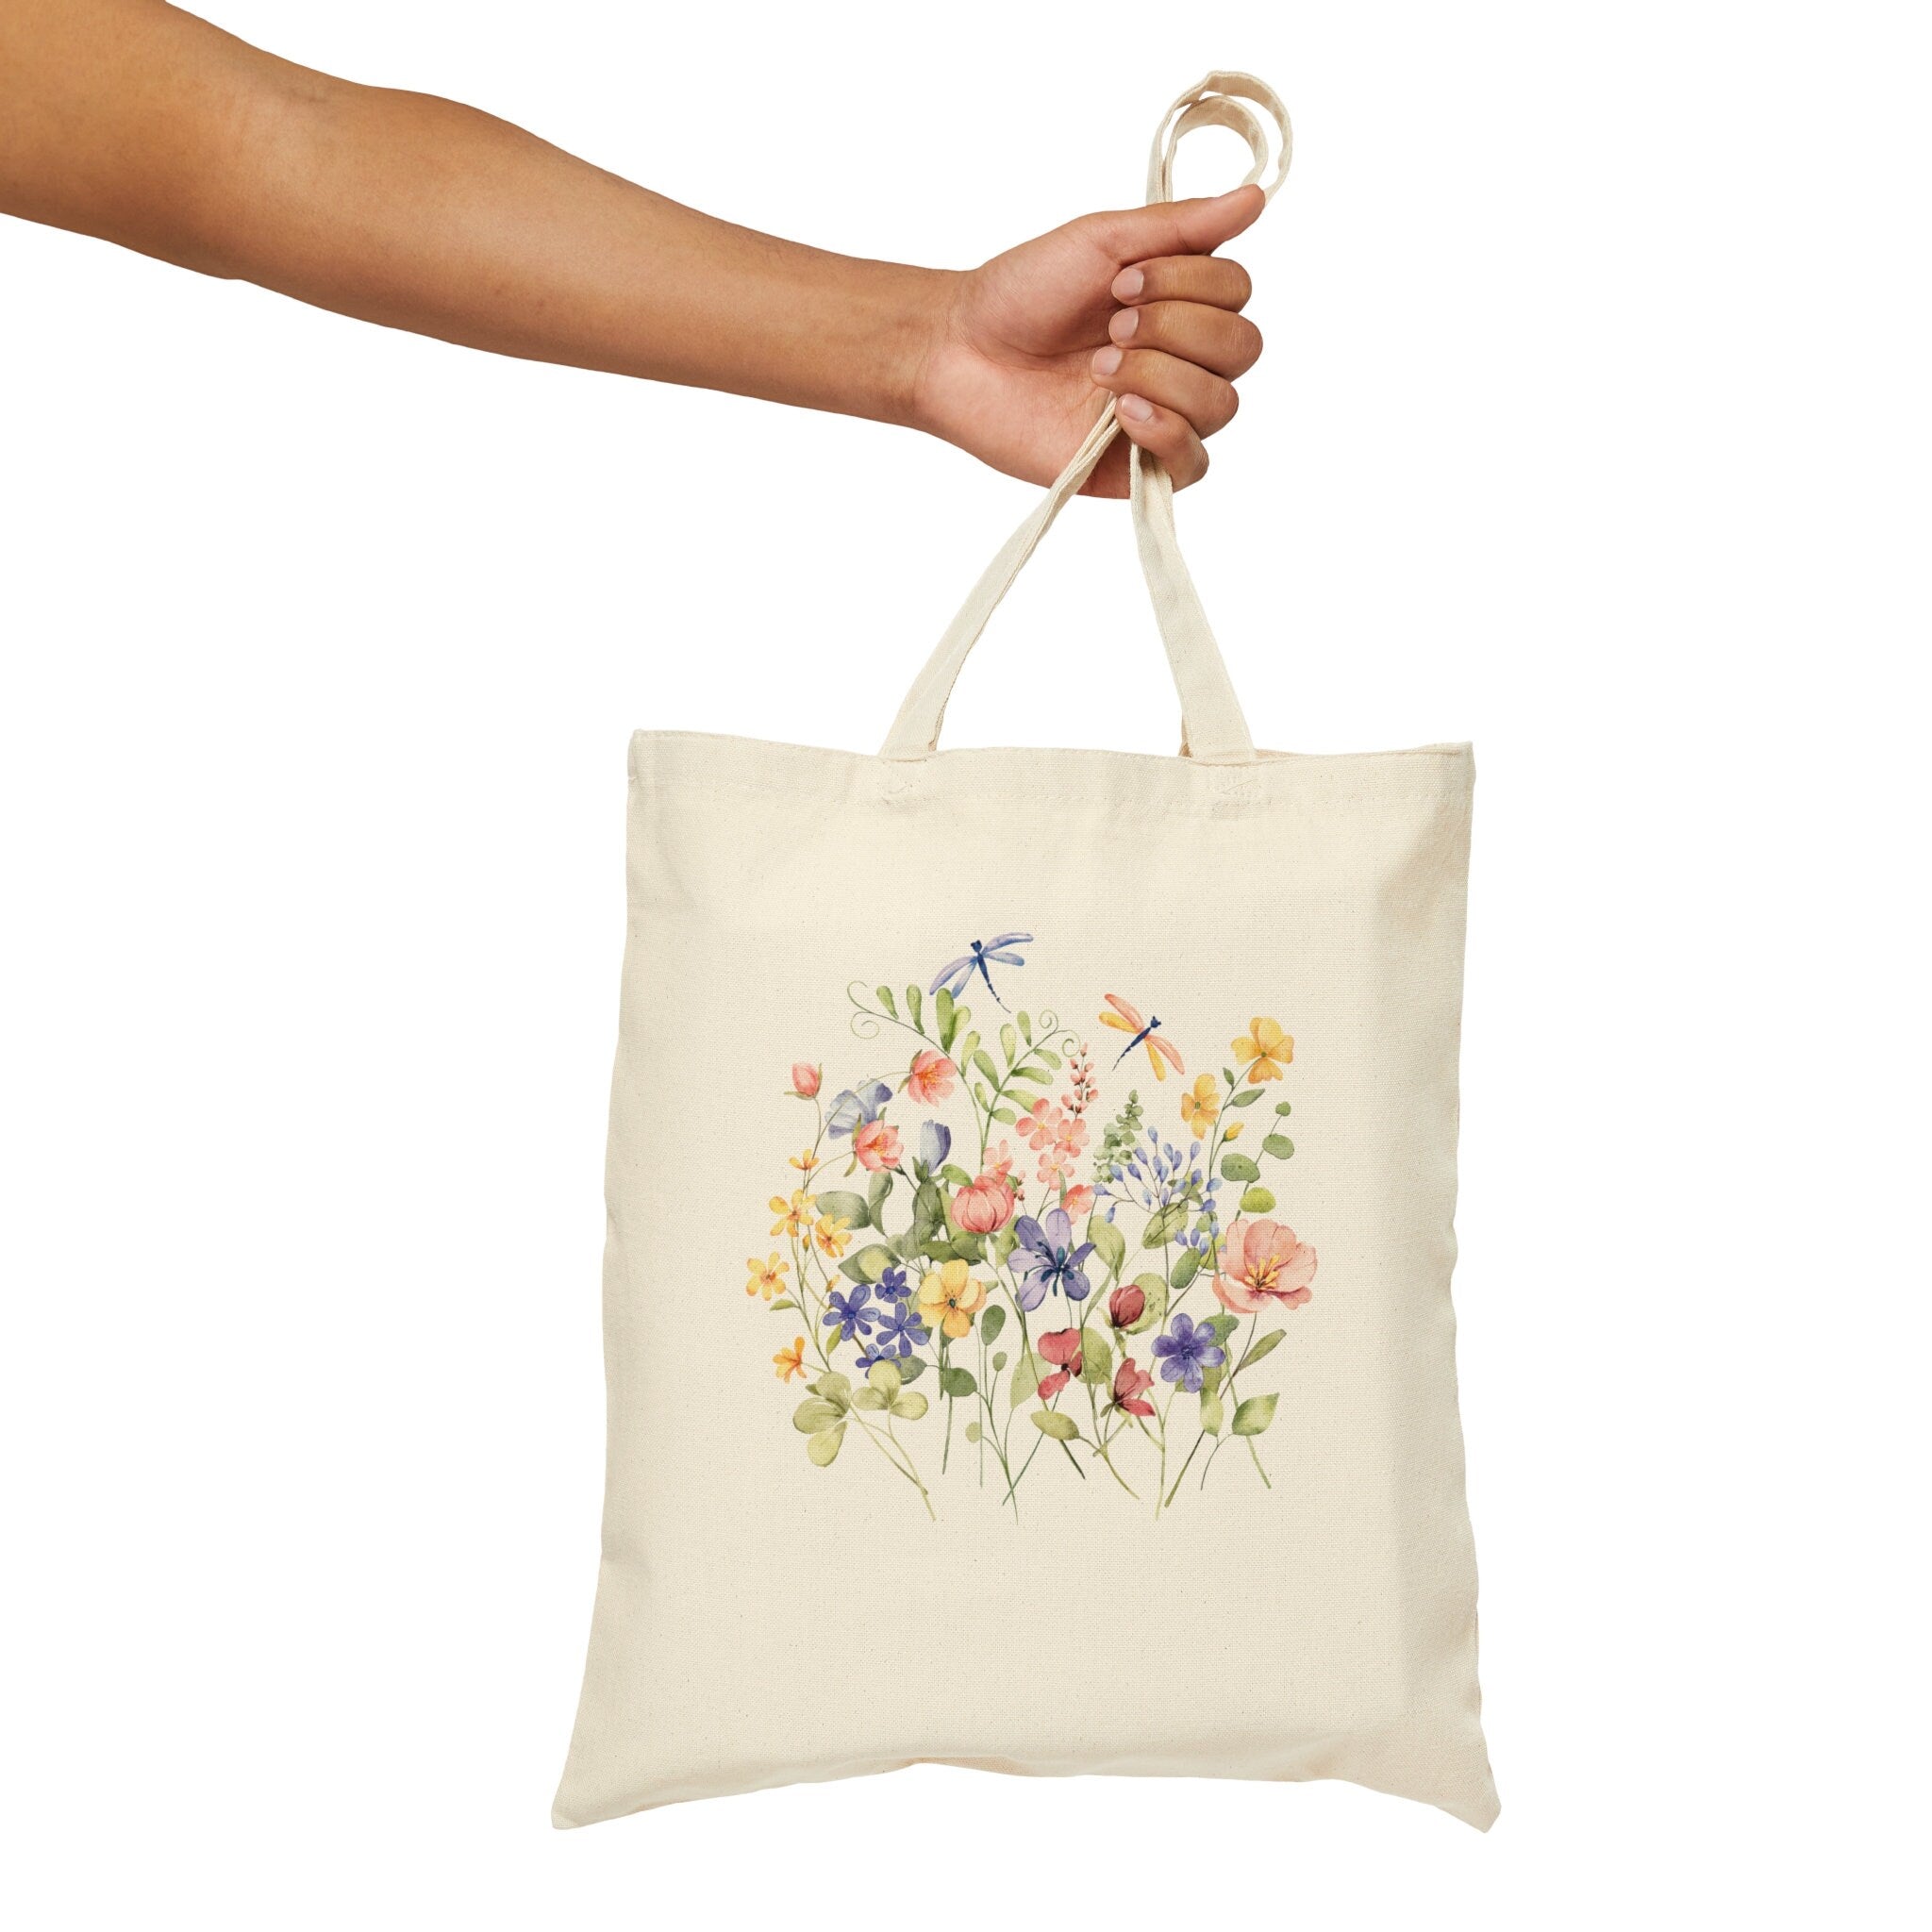 Floral Tote Bag, Wildflower Totes, Bridal Gift Tote Bag, Canvas Tote Bag, Gift For Women Totes, Birthday Gift Bag, Library Bag, Book Totes